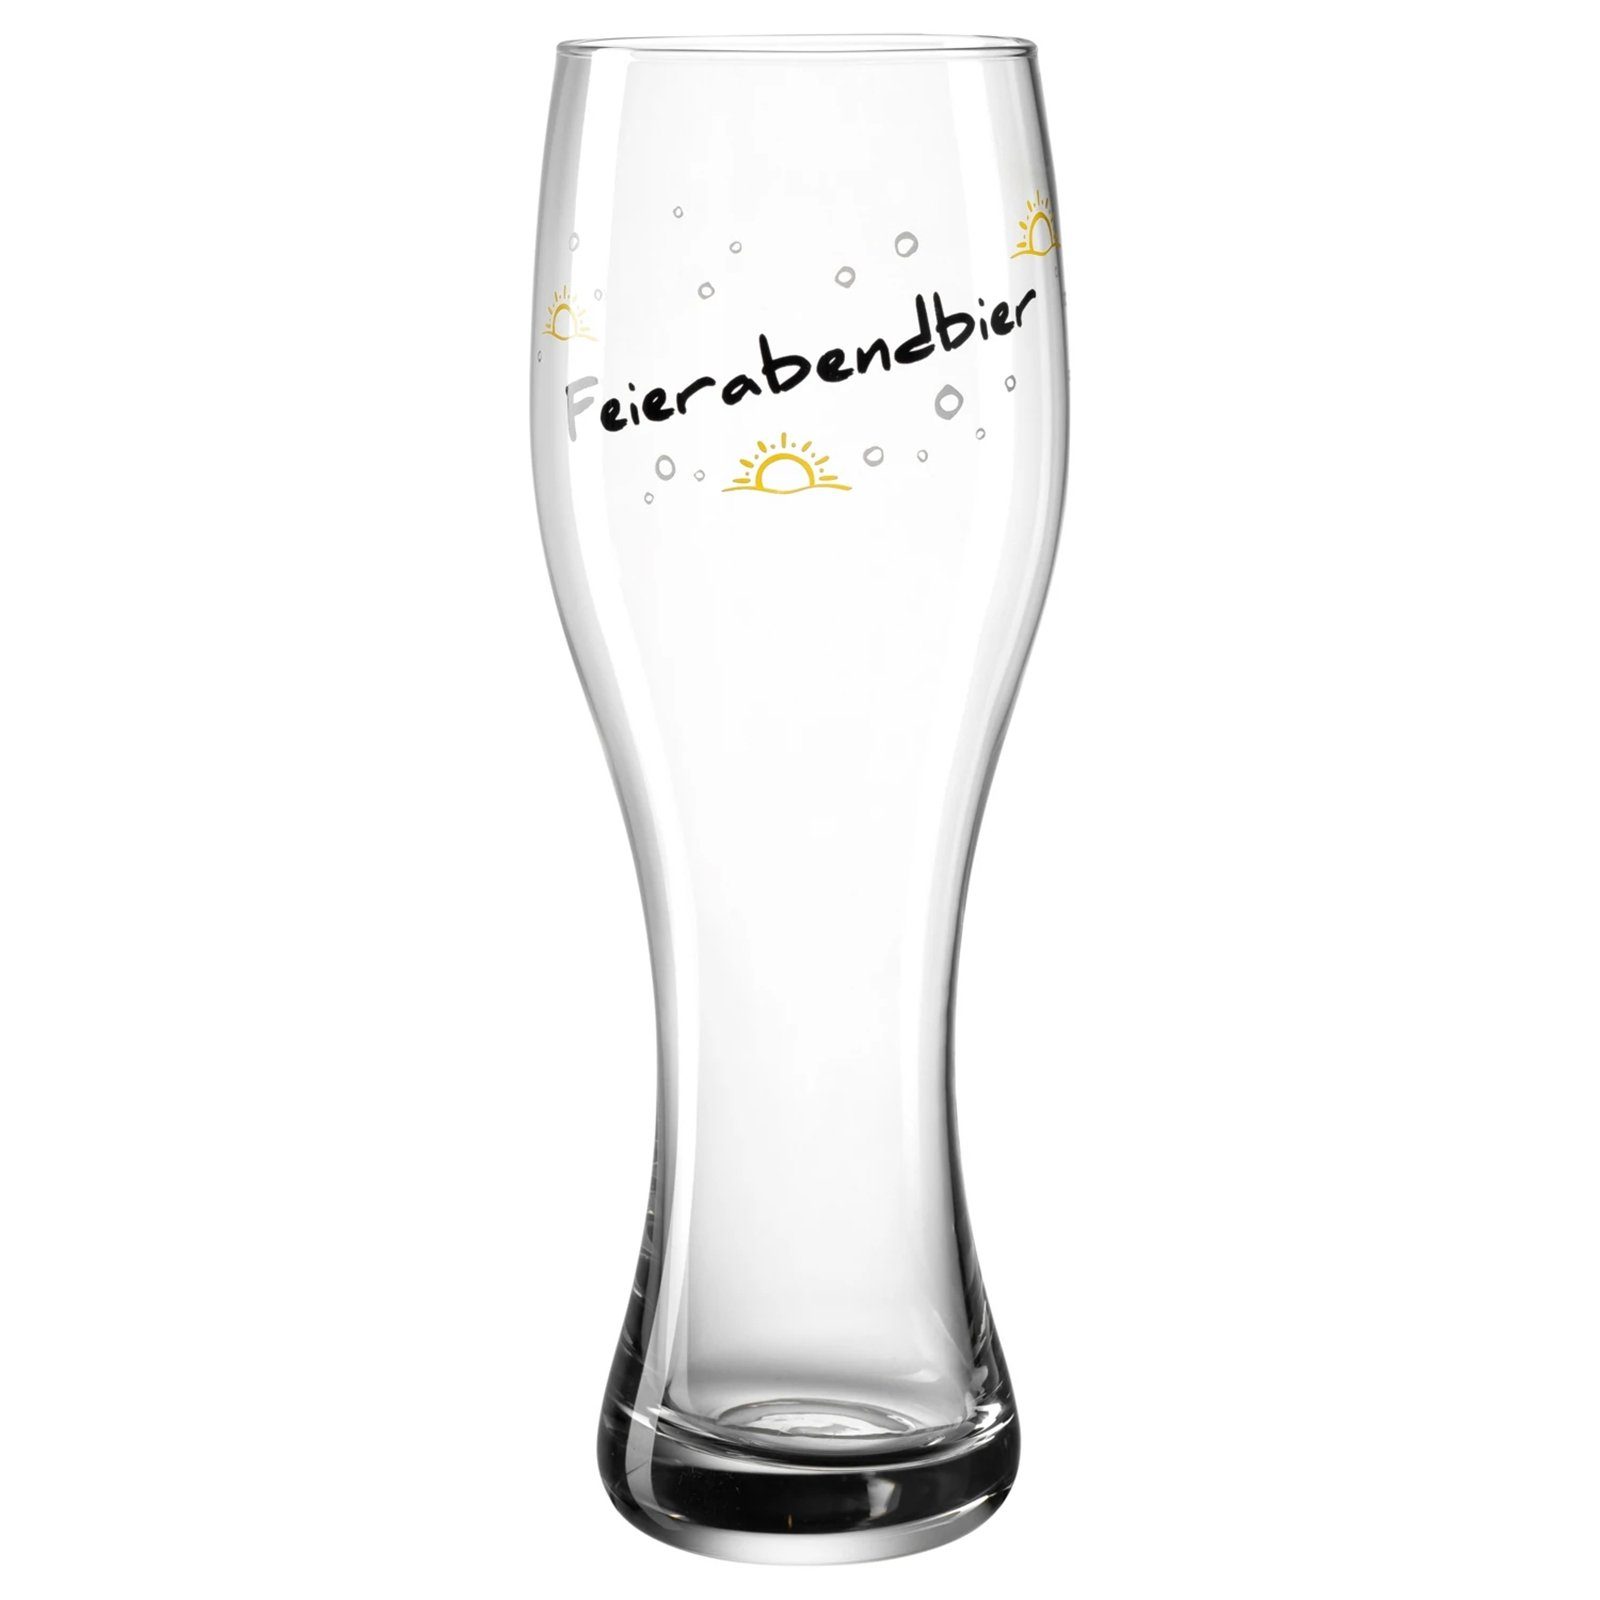 LEONARDO Bierglas Weizenbierglas 500 ml 'Feierabendbier' PRESENTE, Glas